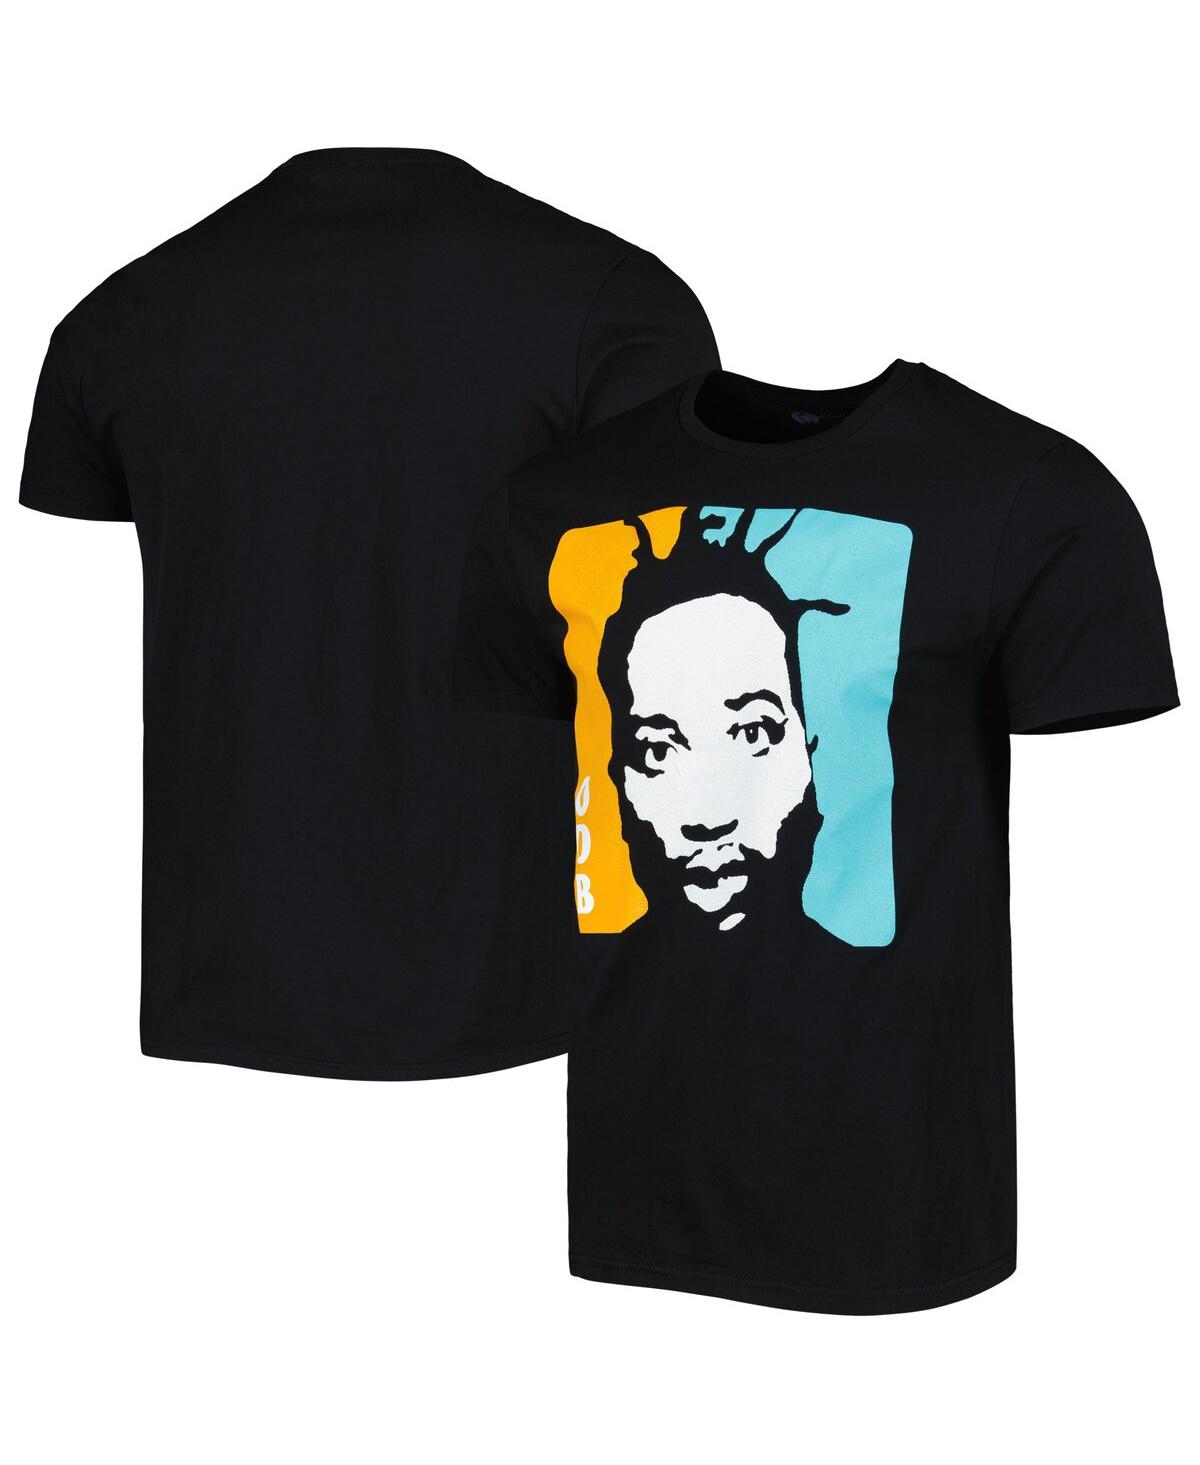 Men's and Women's Black Odb Graphic T-shirt - Black